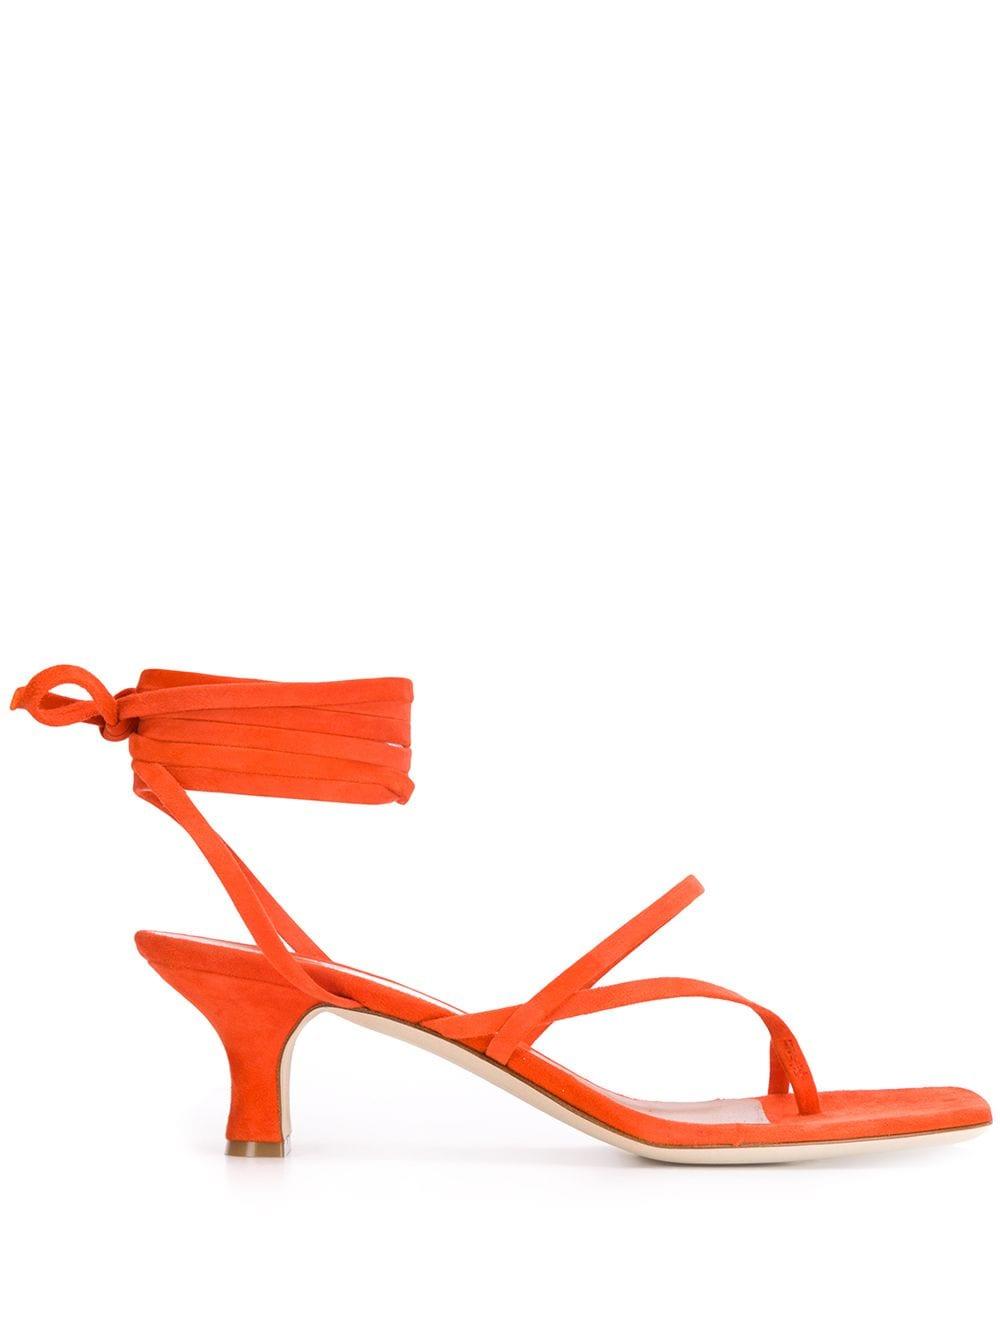 Paris Texas Suede Wrap Tie Low Sandals in Orange - Save 23% - Lyst